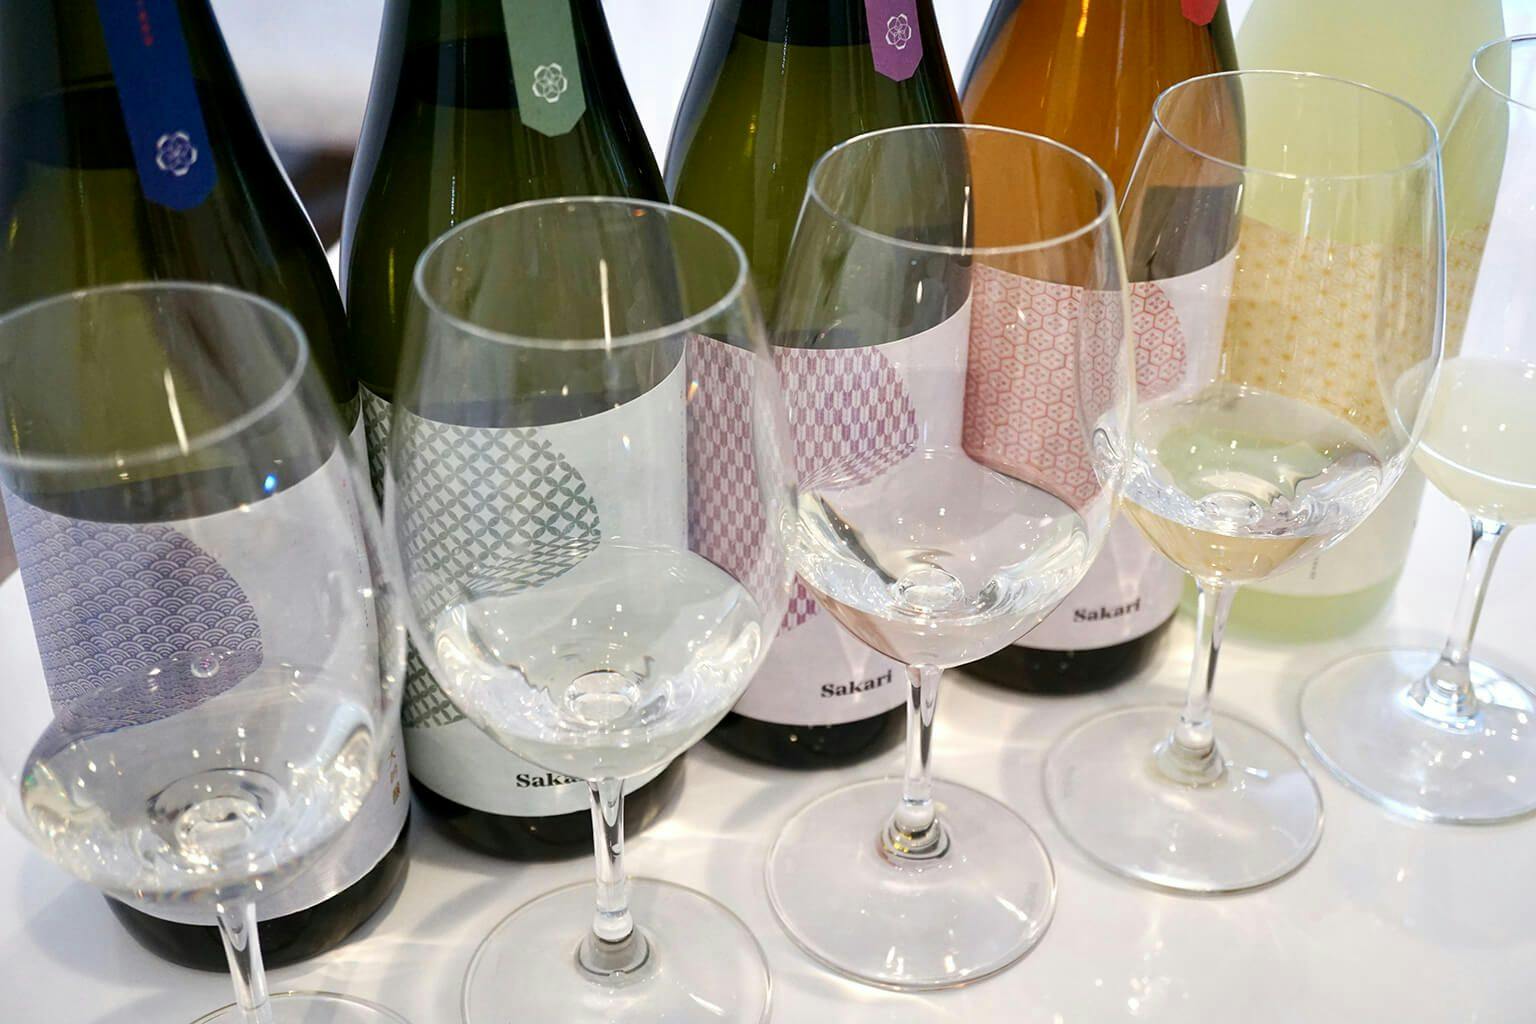 Nihonsakari by wine glasses